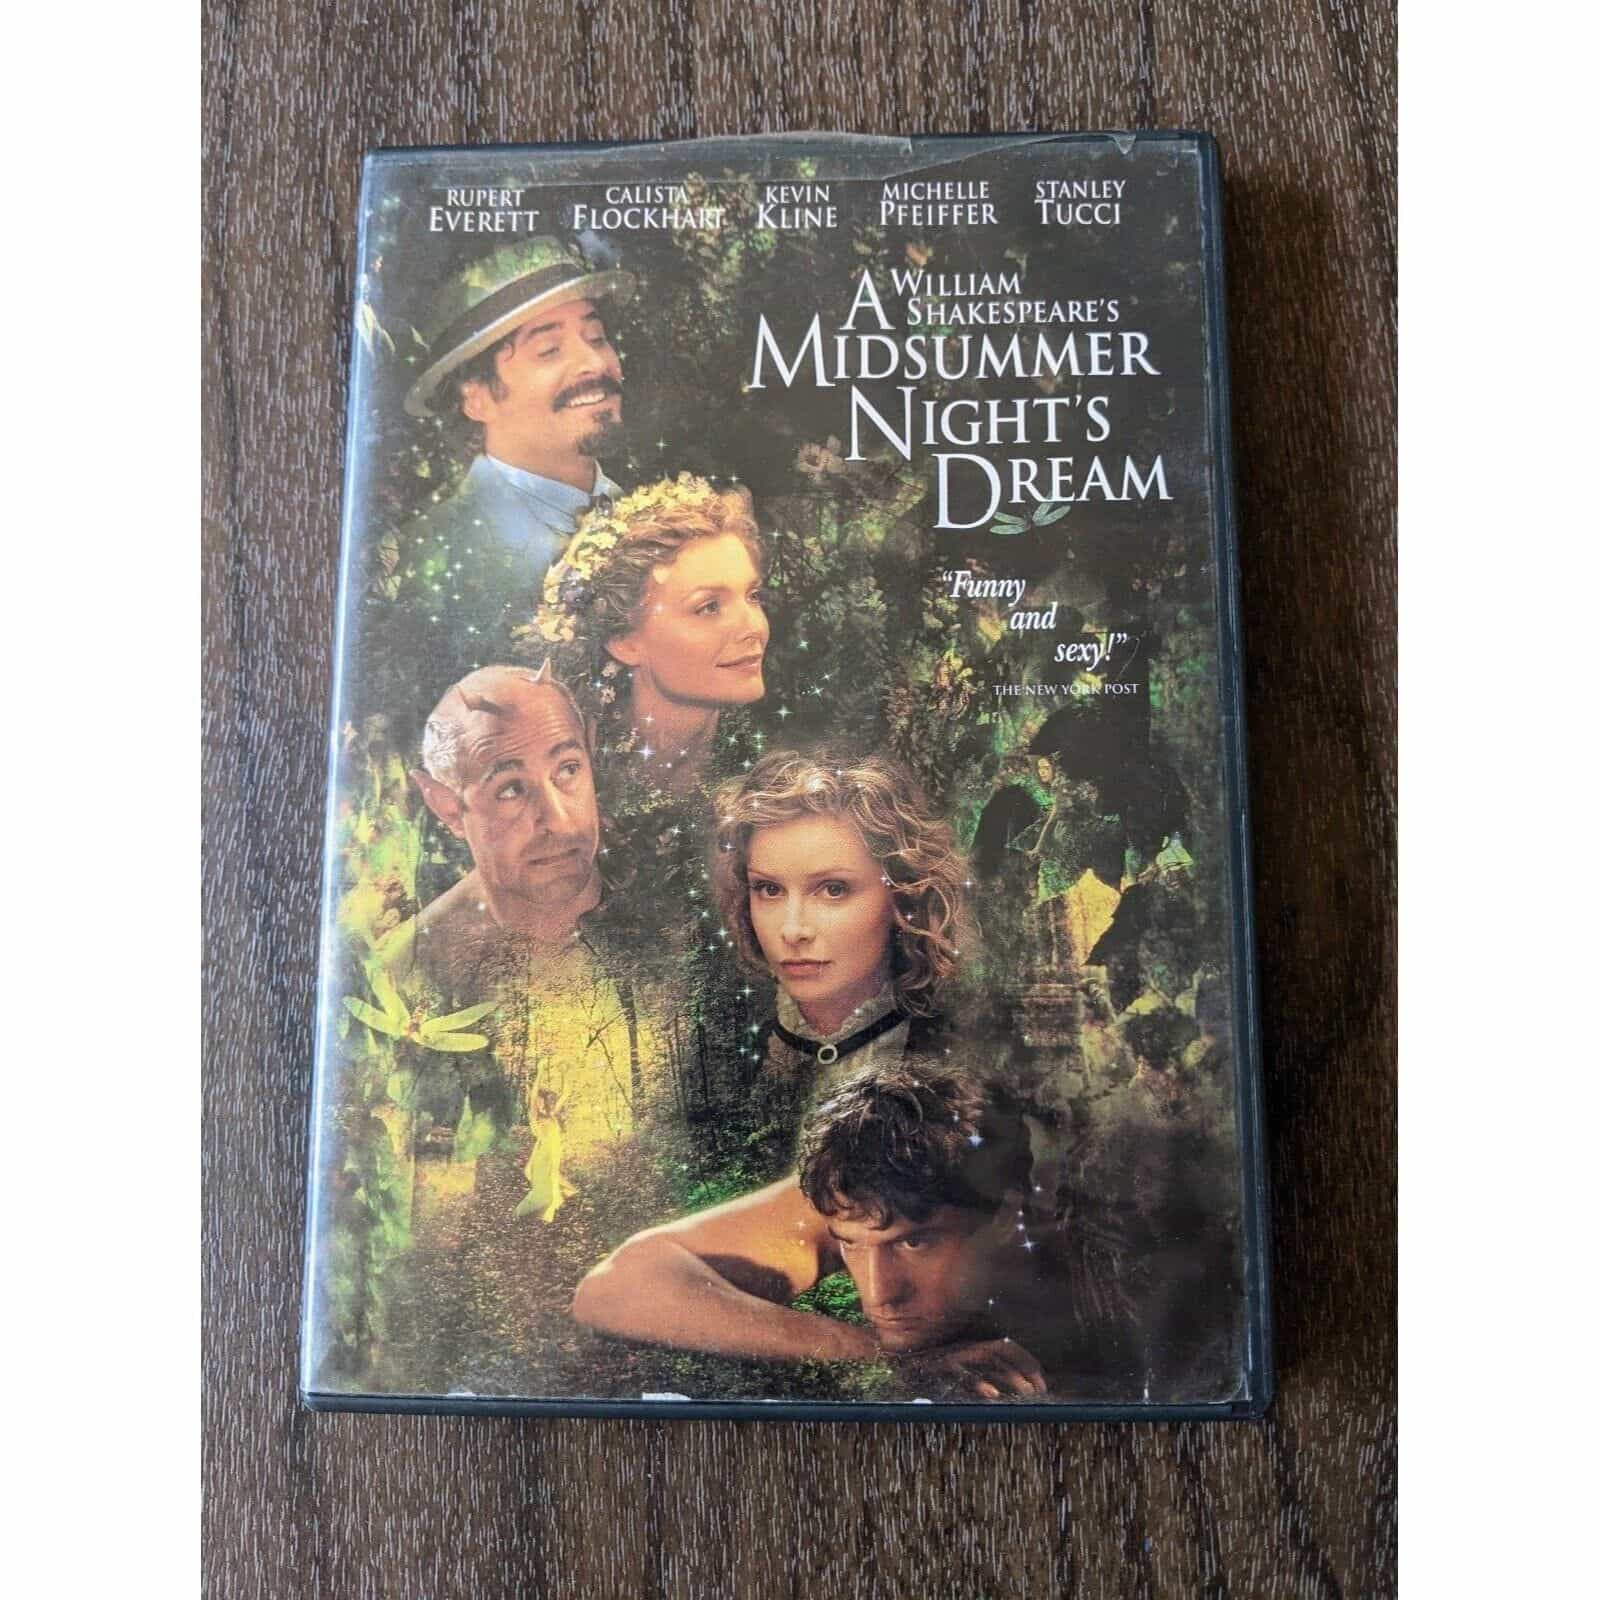 William Shakespeare’s A Midsummer Night’s Dream DVD 1999 Movie